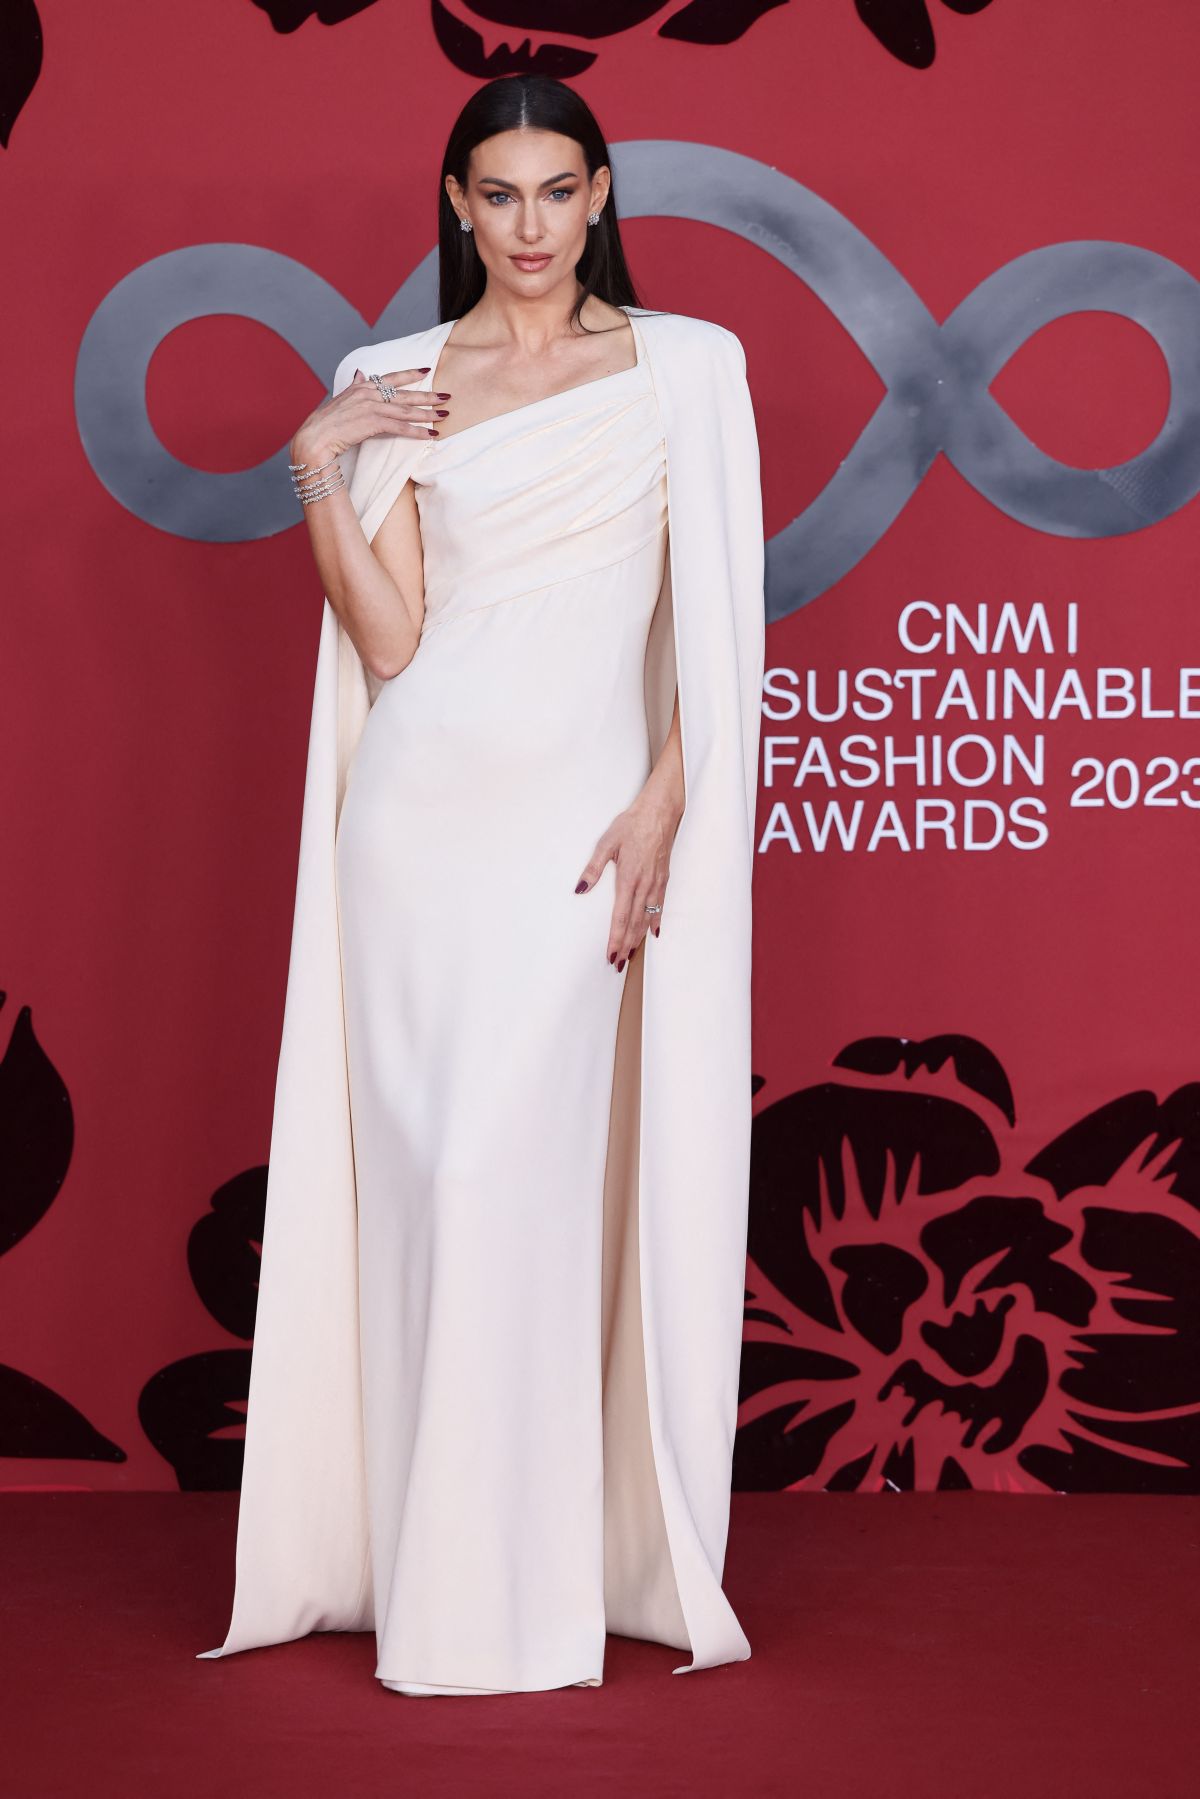 PAOLA TURANI at Cnmi Sustainable Fashion Awards 2023 in Milan 09/24